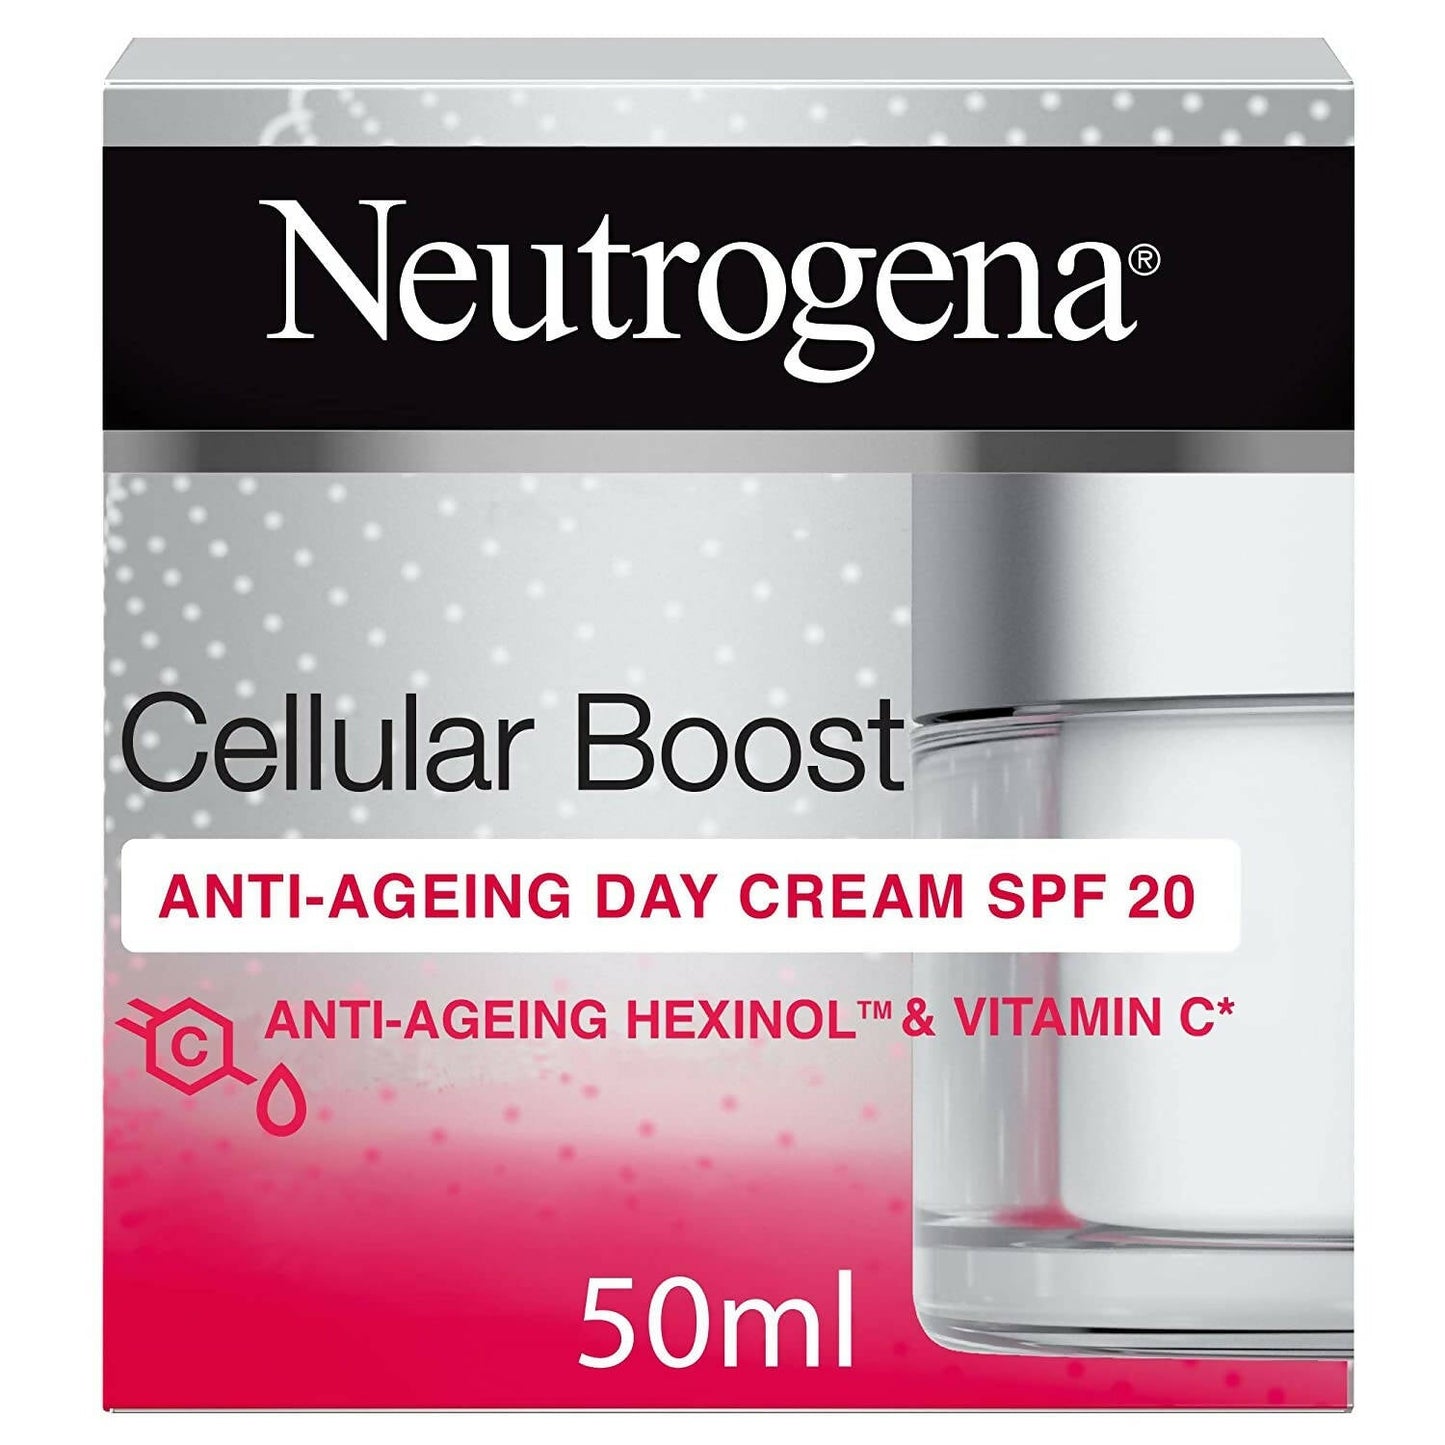 Neutrogena Cellular Boost Anti-Aging Day Cream SPF20